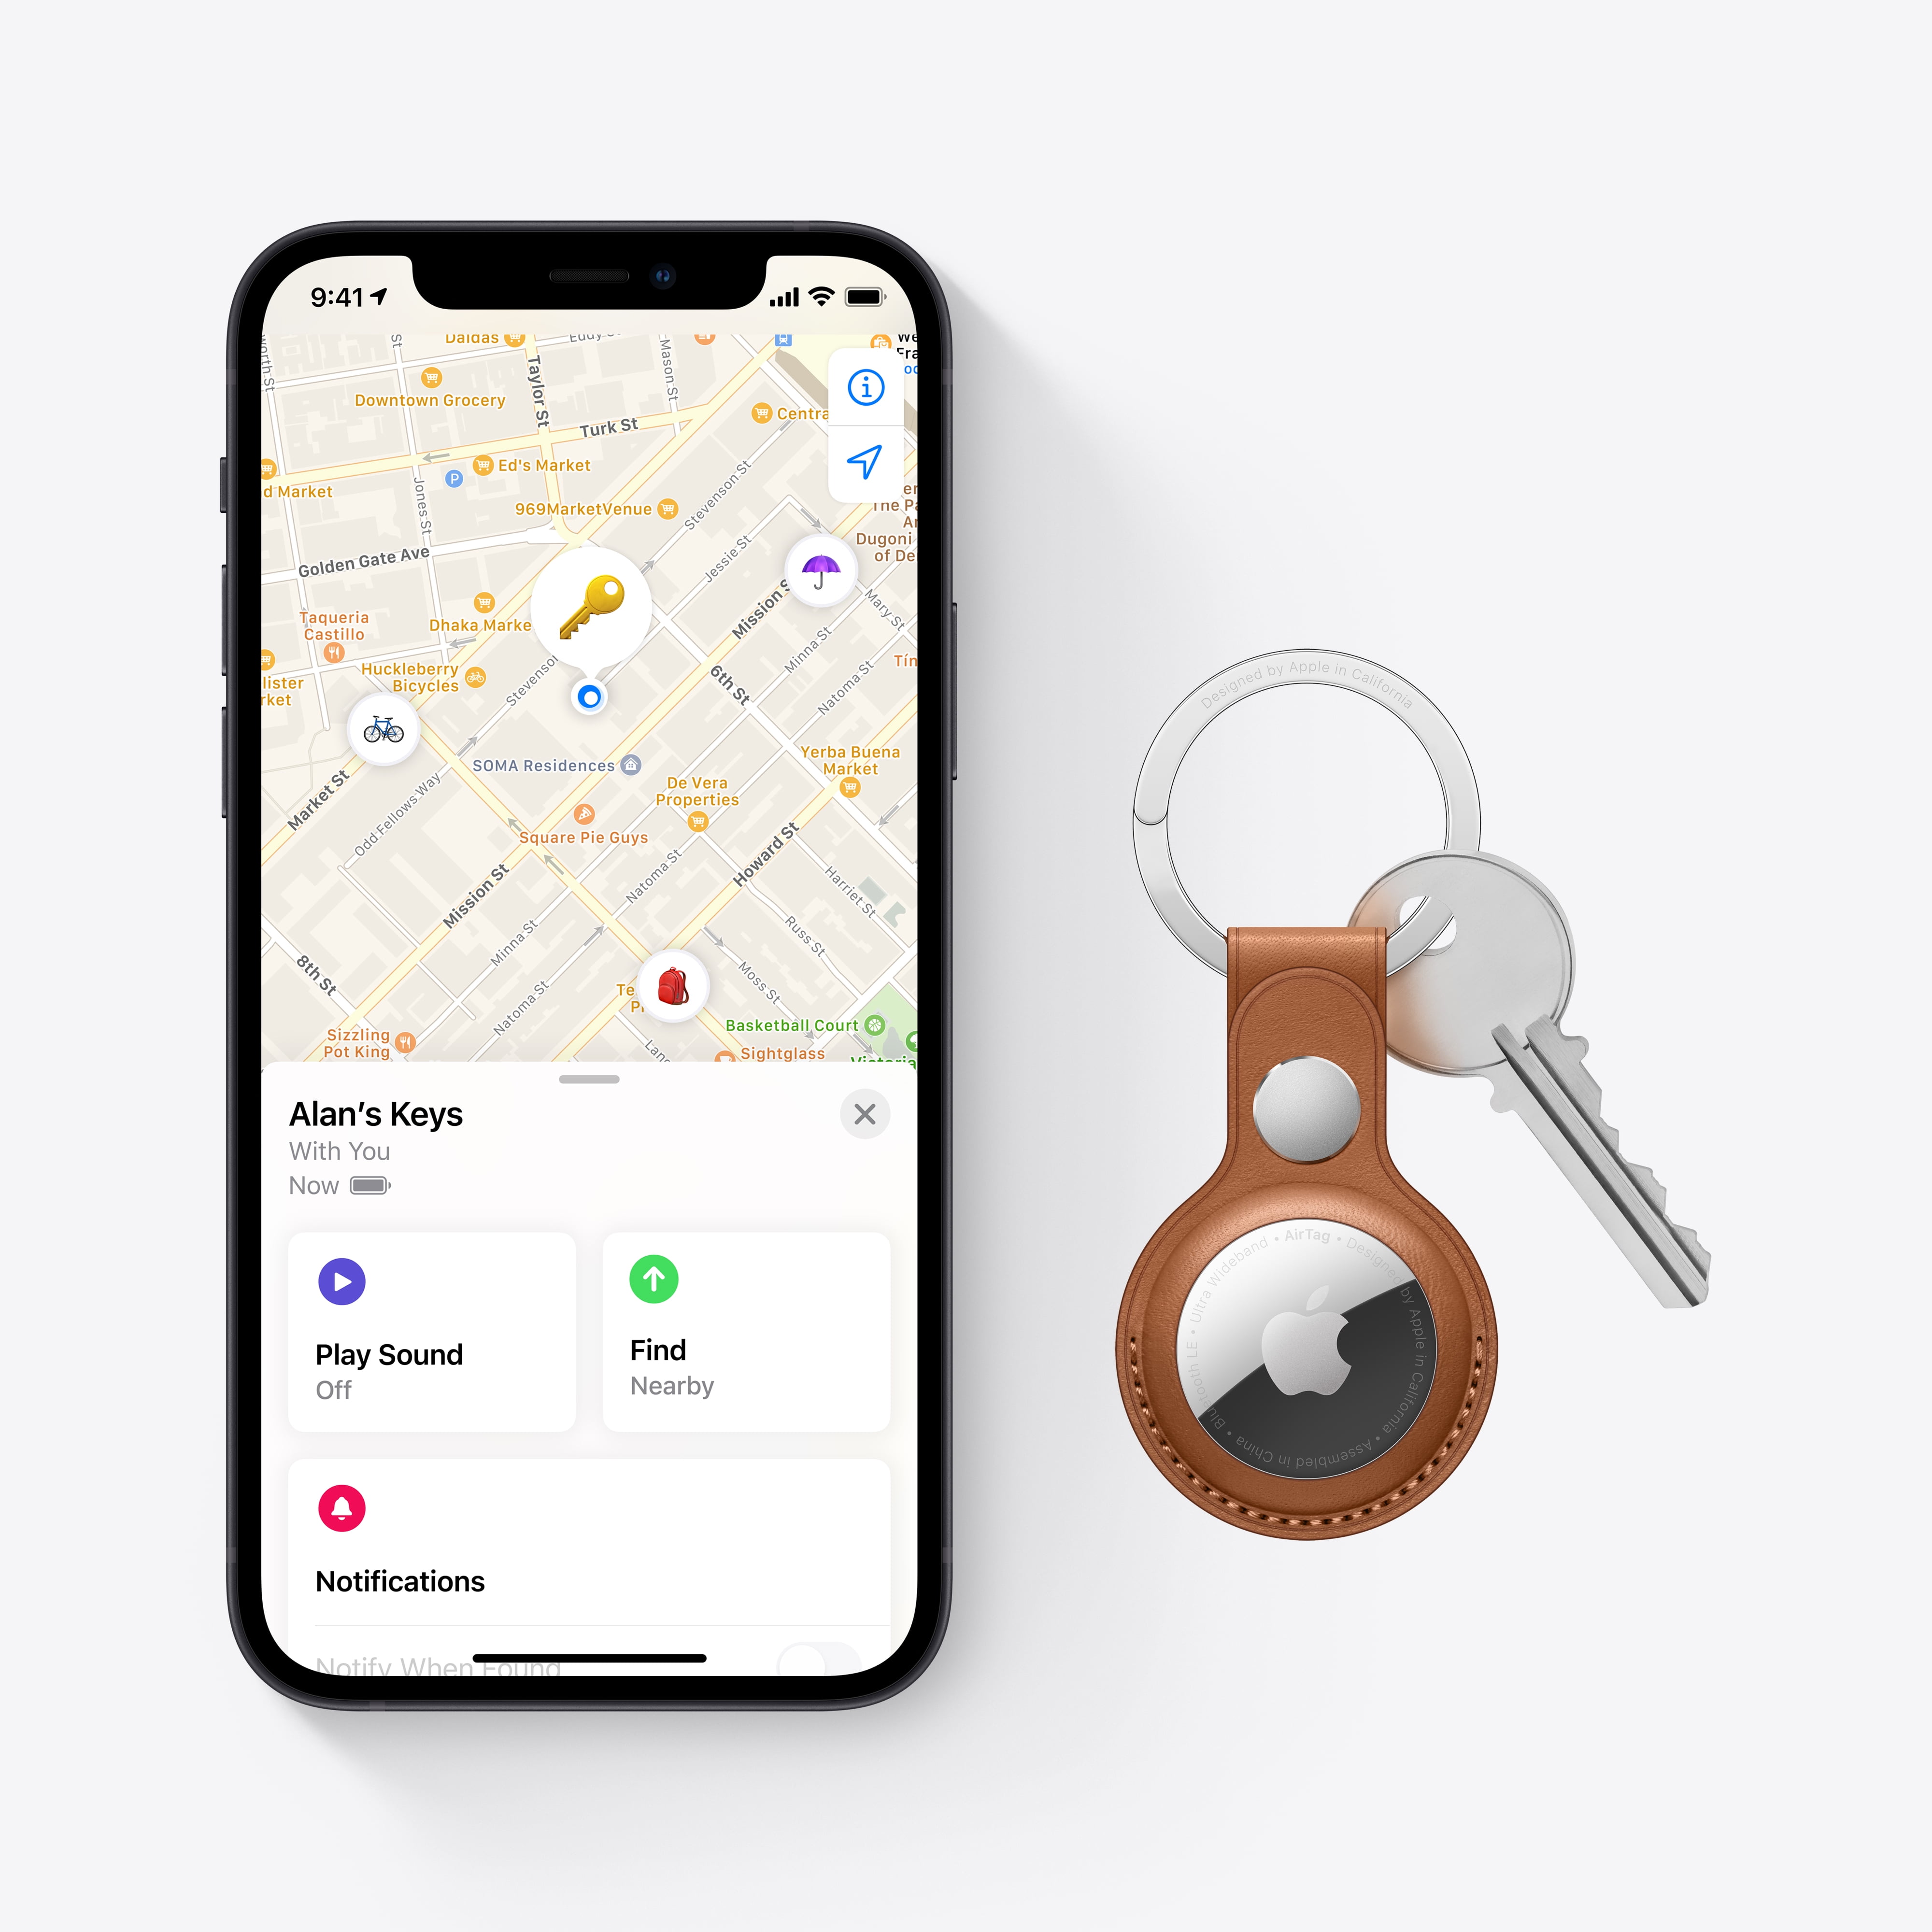 Tracker Bluetooth AirTag Apple Lot de 4 Key Finder avec une